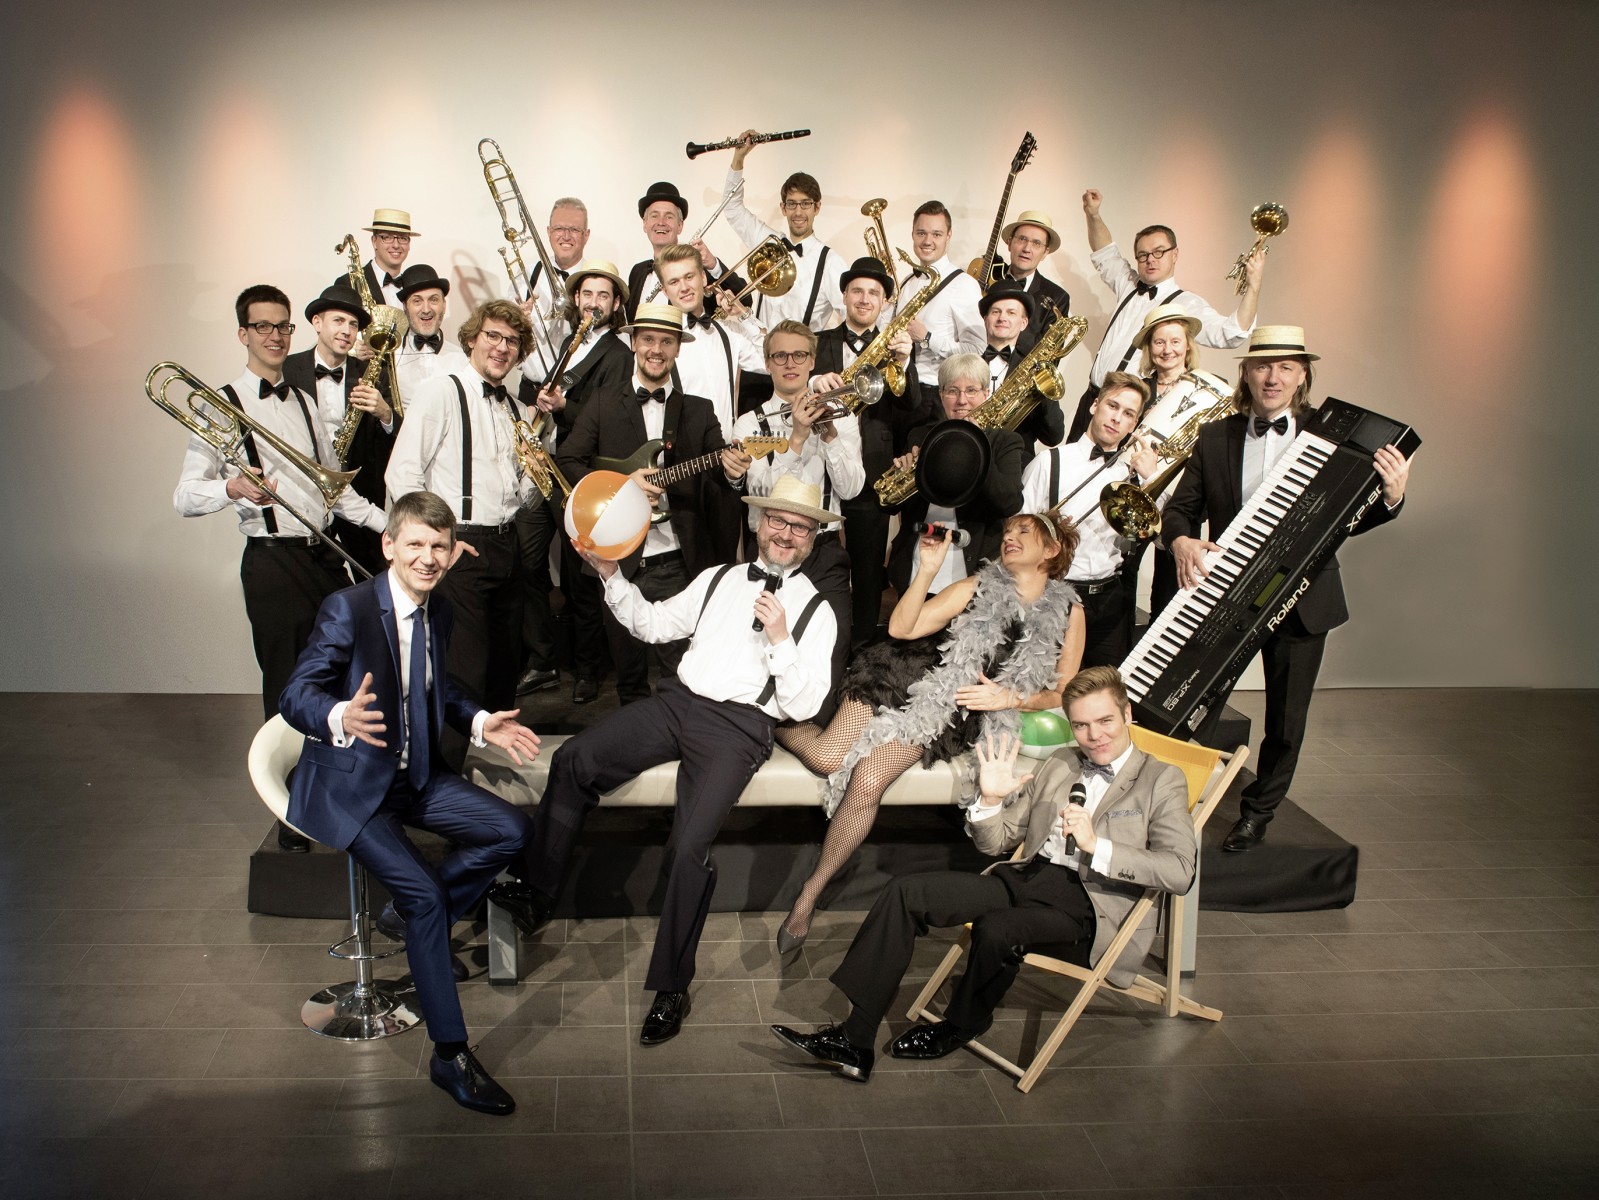 ENTFÄLLT Westfalia Big Band in Ahrensburg 2021 - Union Reiseteam 